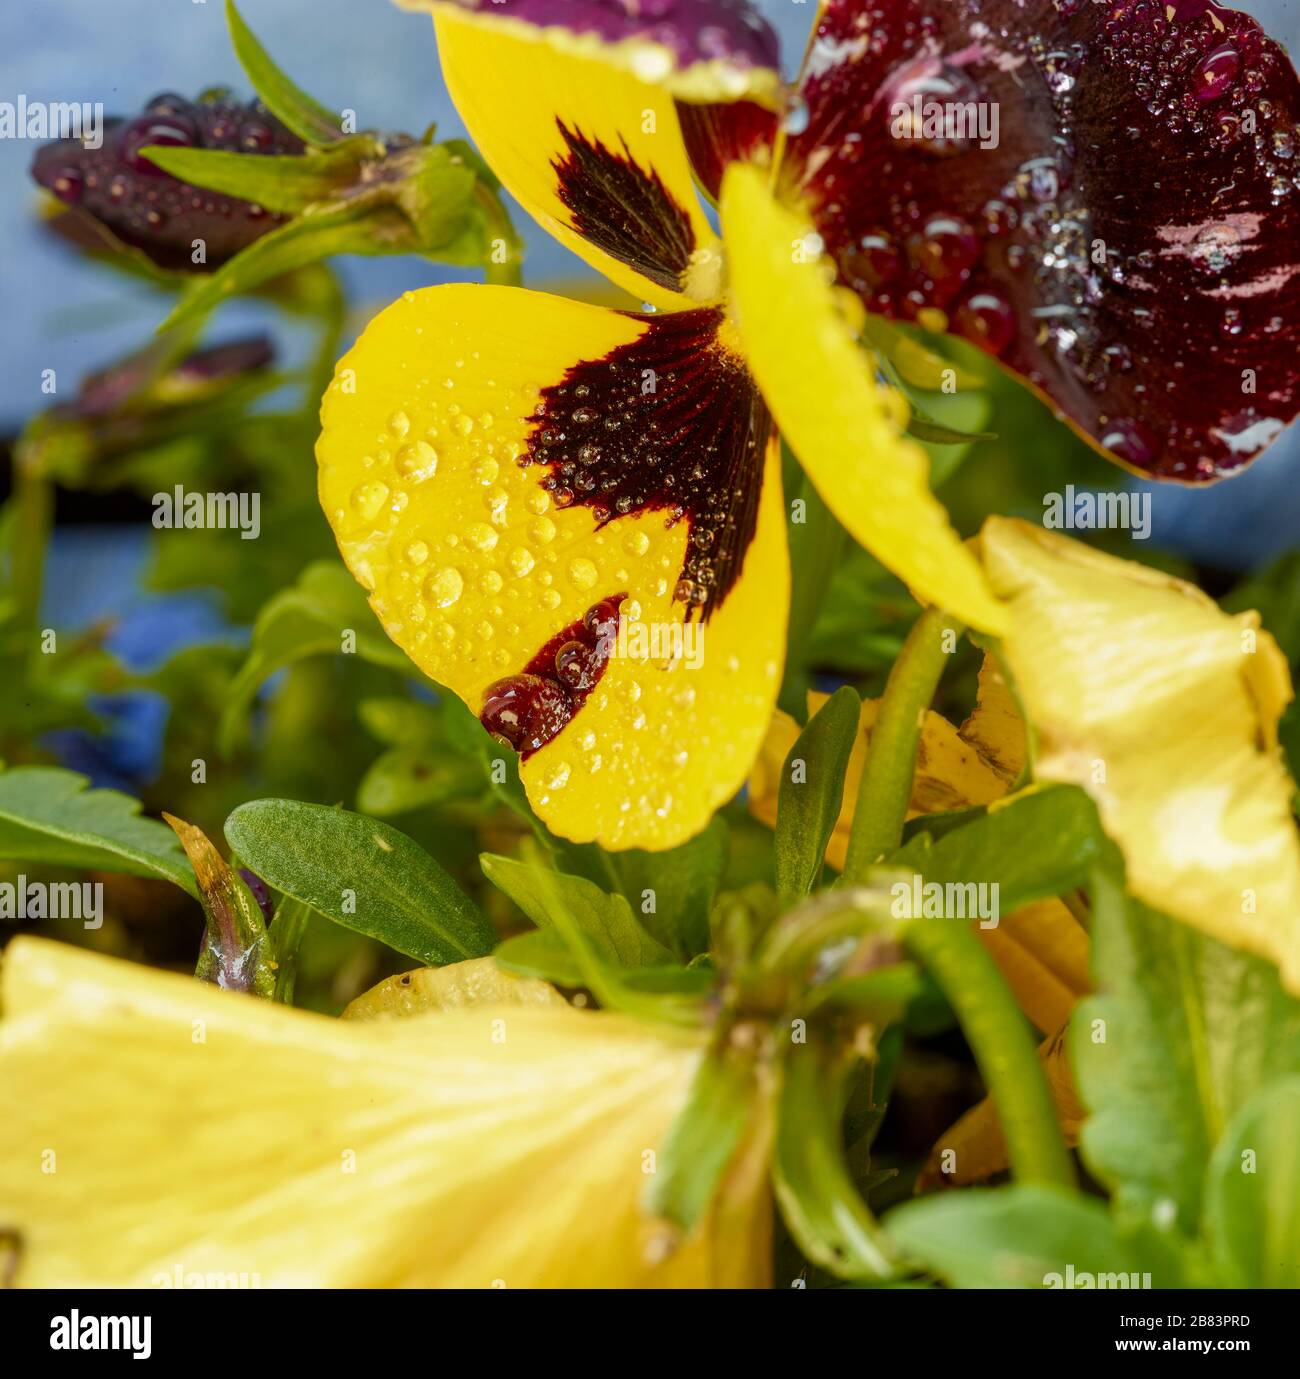 Macro natural flower portraits of pansies following rain Stock Photo